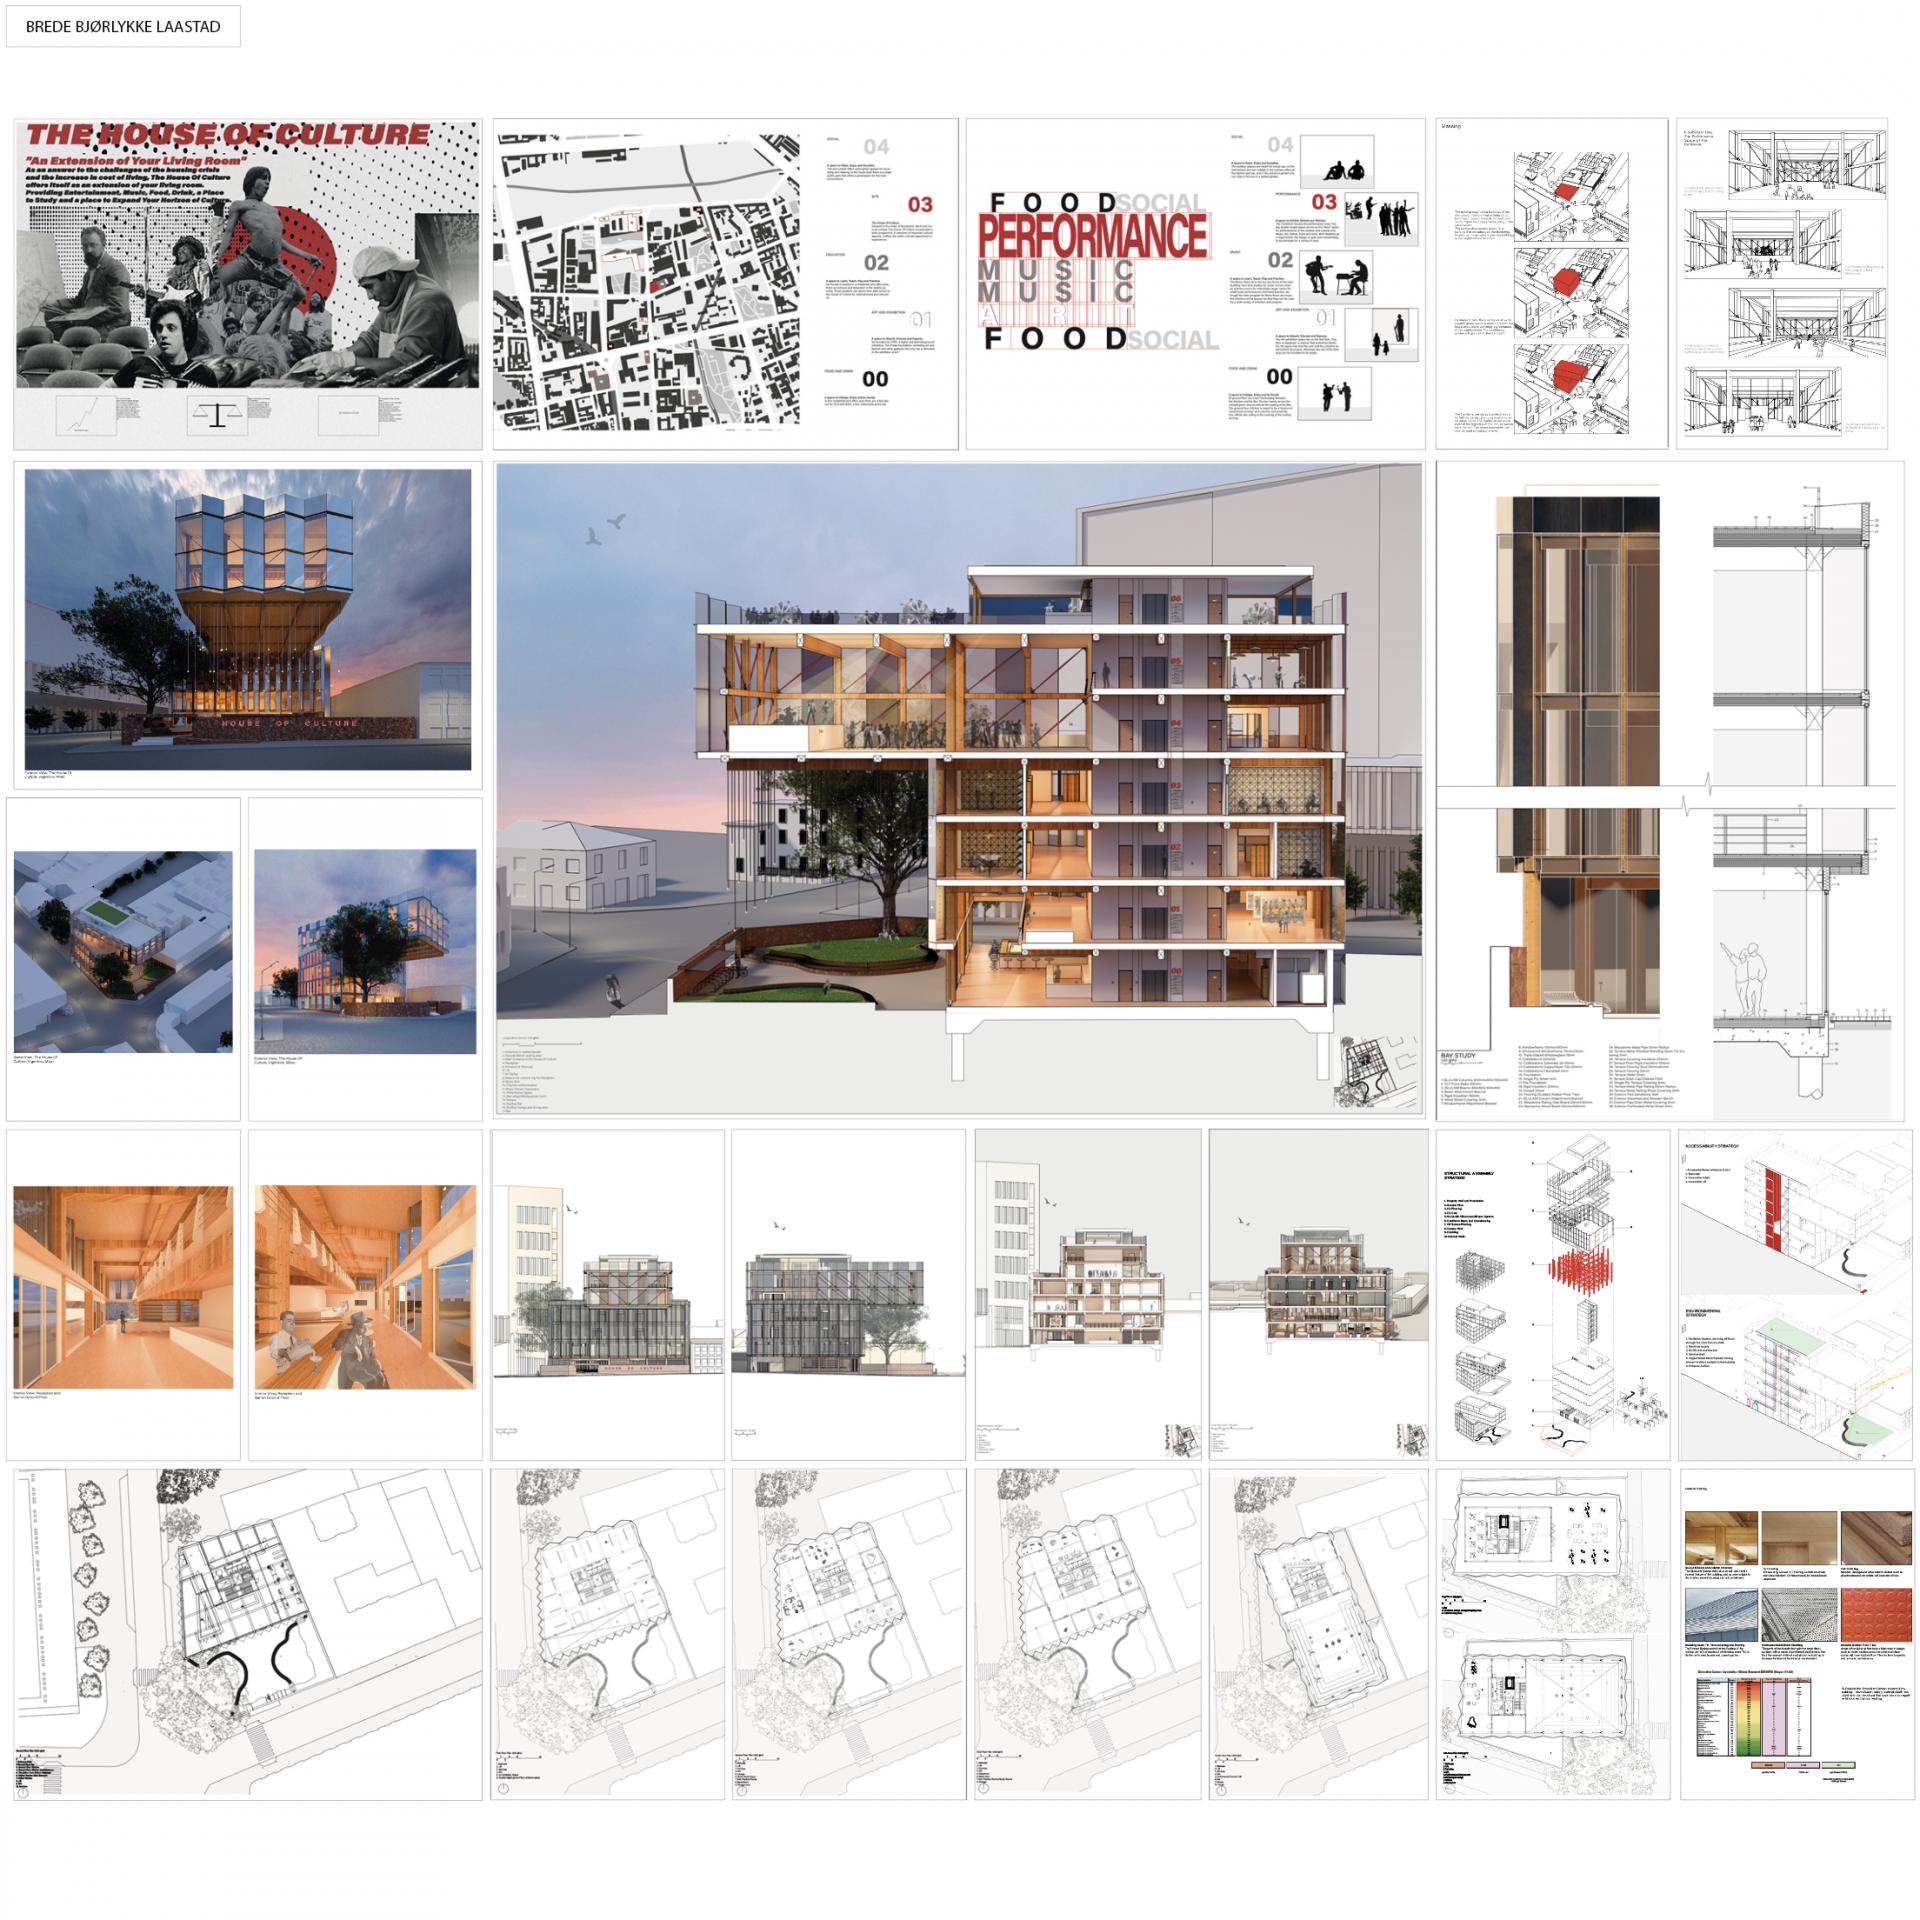 Brede Laastad | Architecture 2